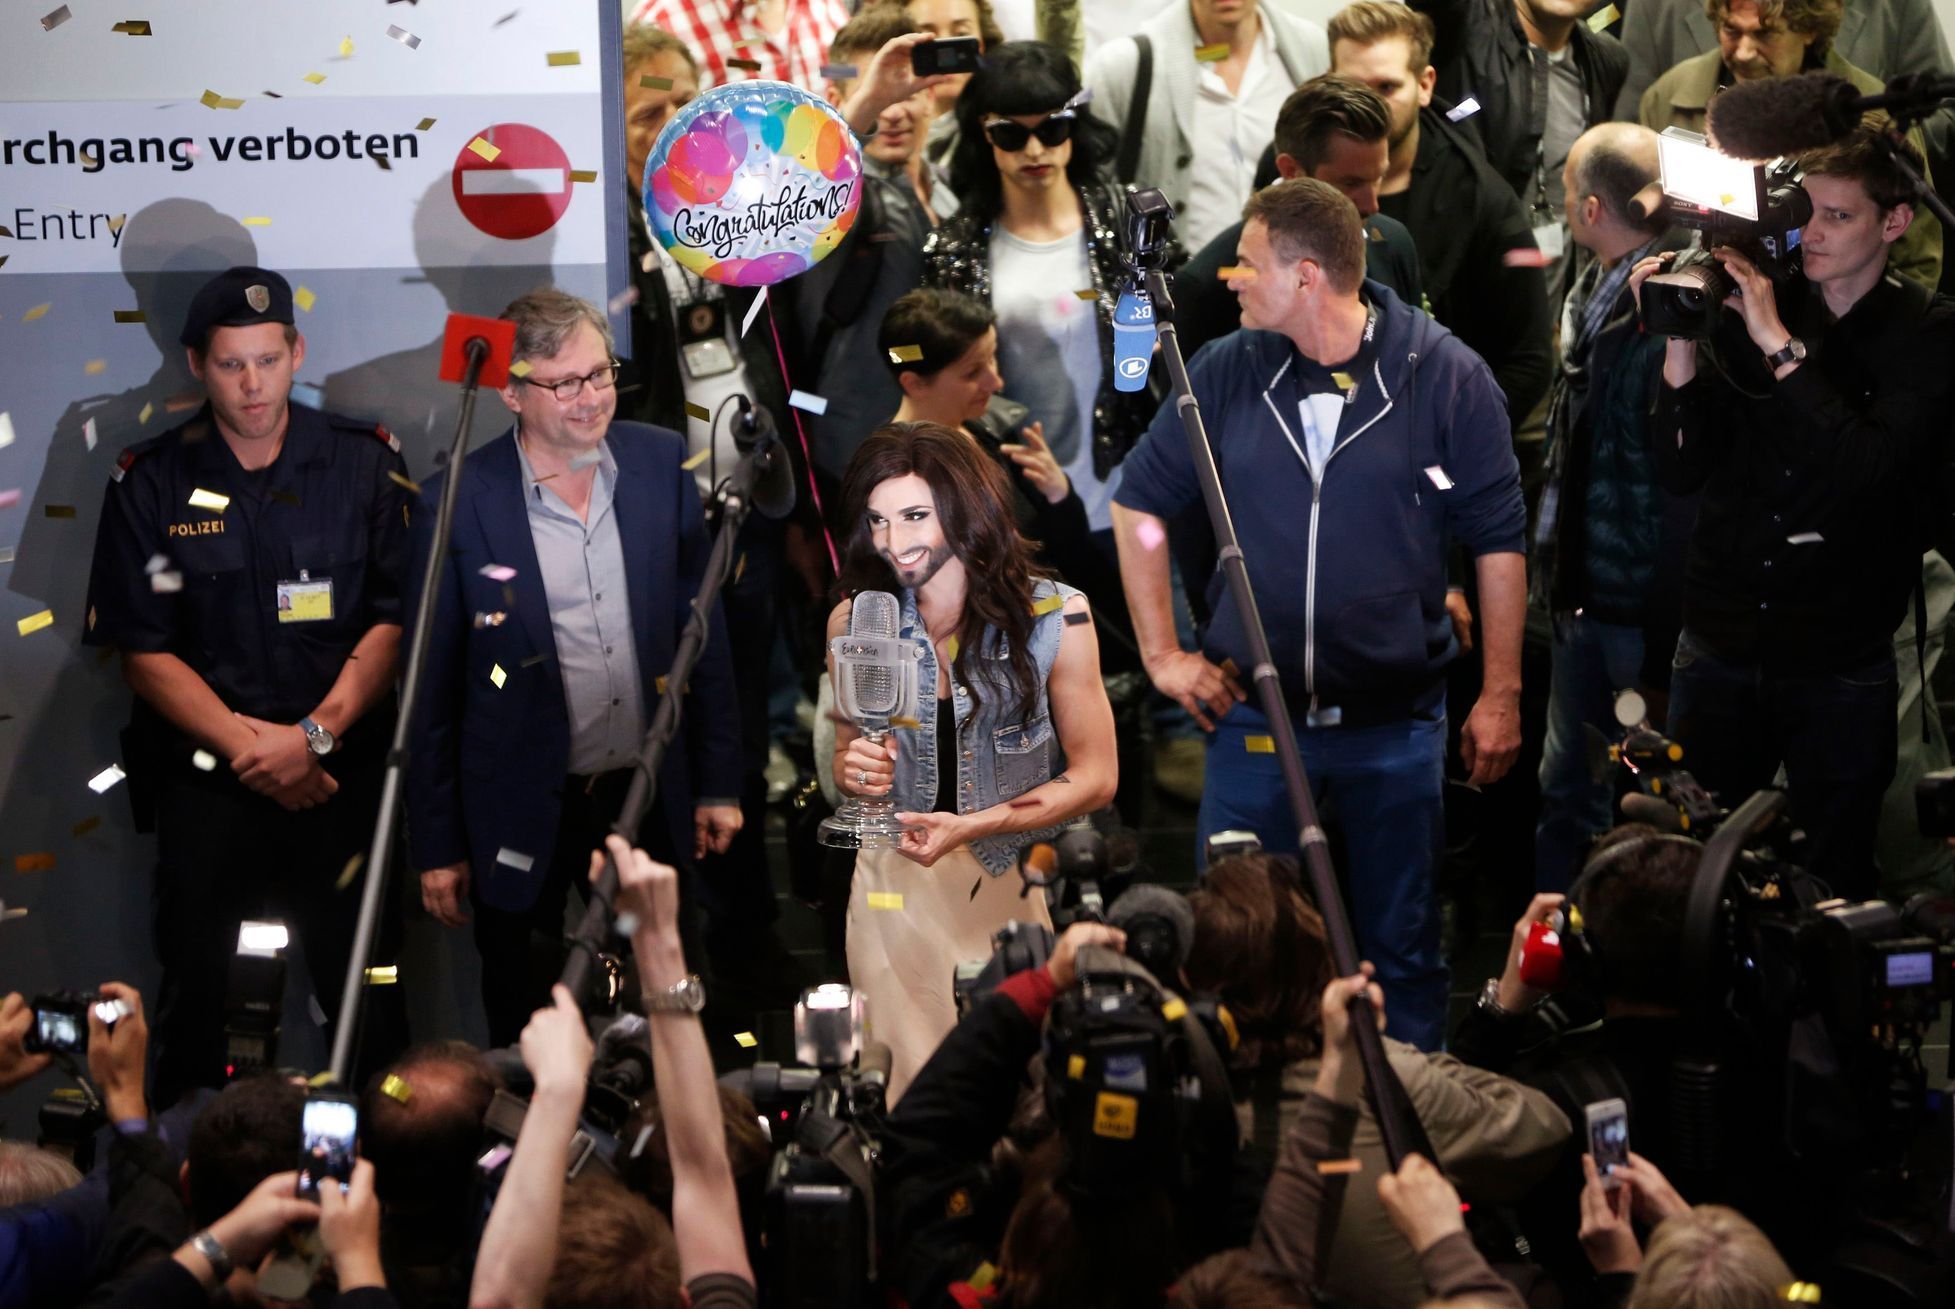 Austria's Conchita Wurst arrives with her trophy at Vienna's airport